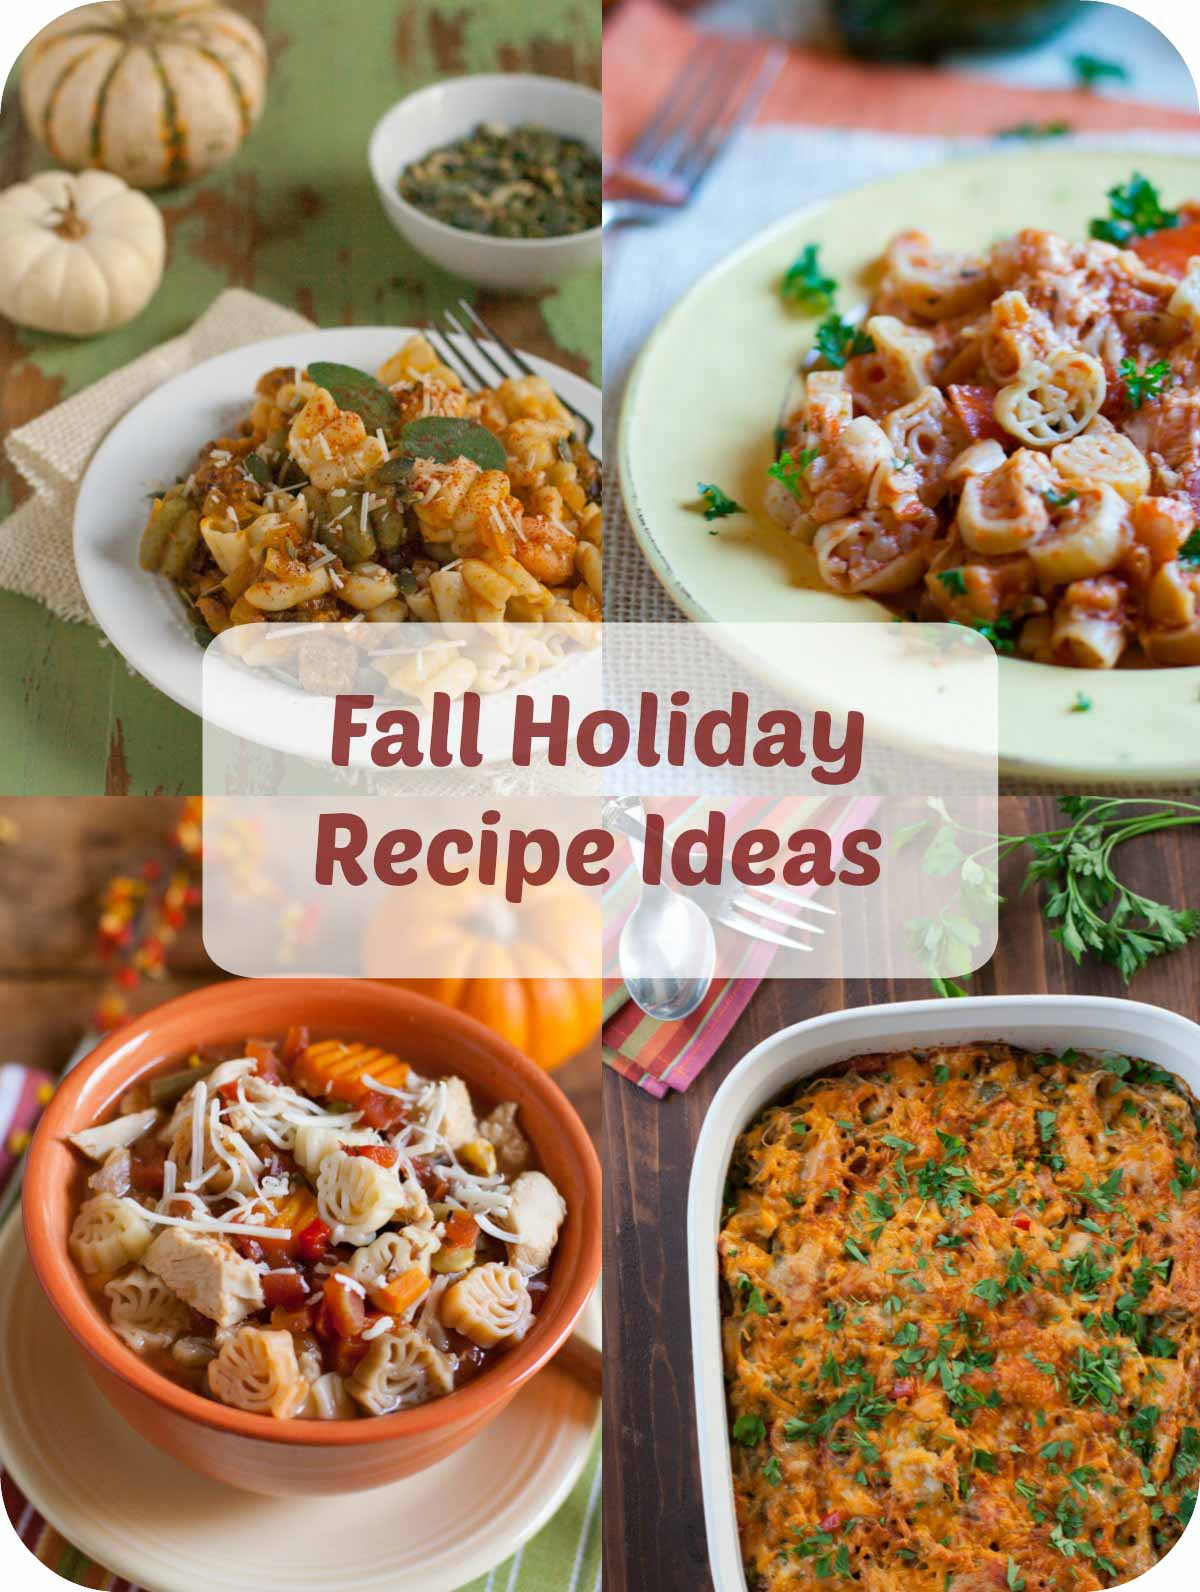 Fall Holiday Recipe Ideas | Four fabulous pasta recipes for your holiday entertaining! | WorldofPastabilities.com